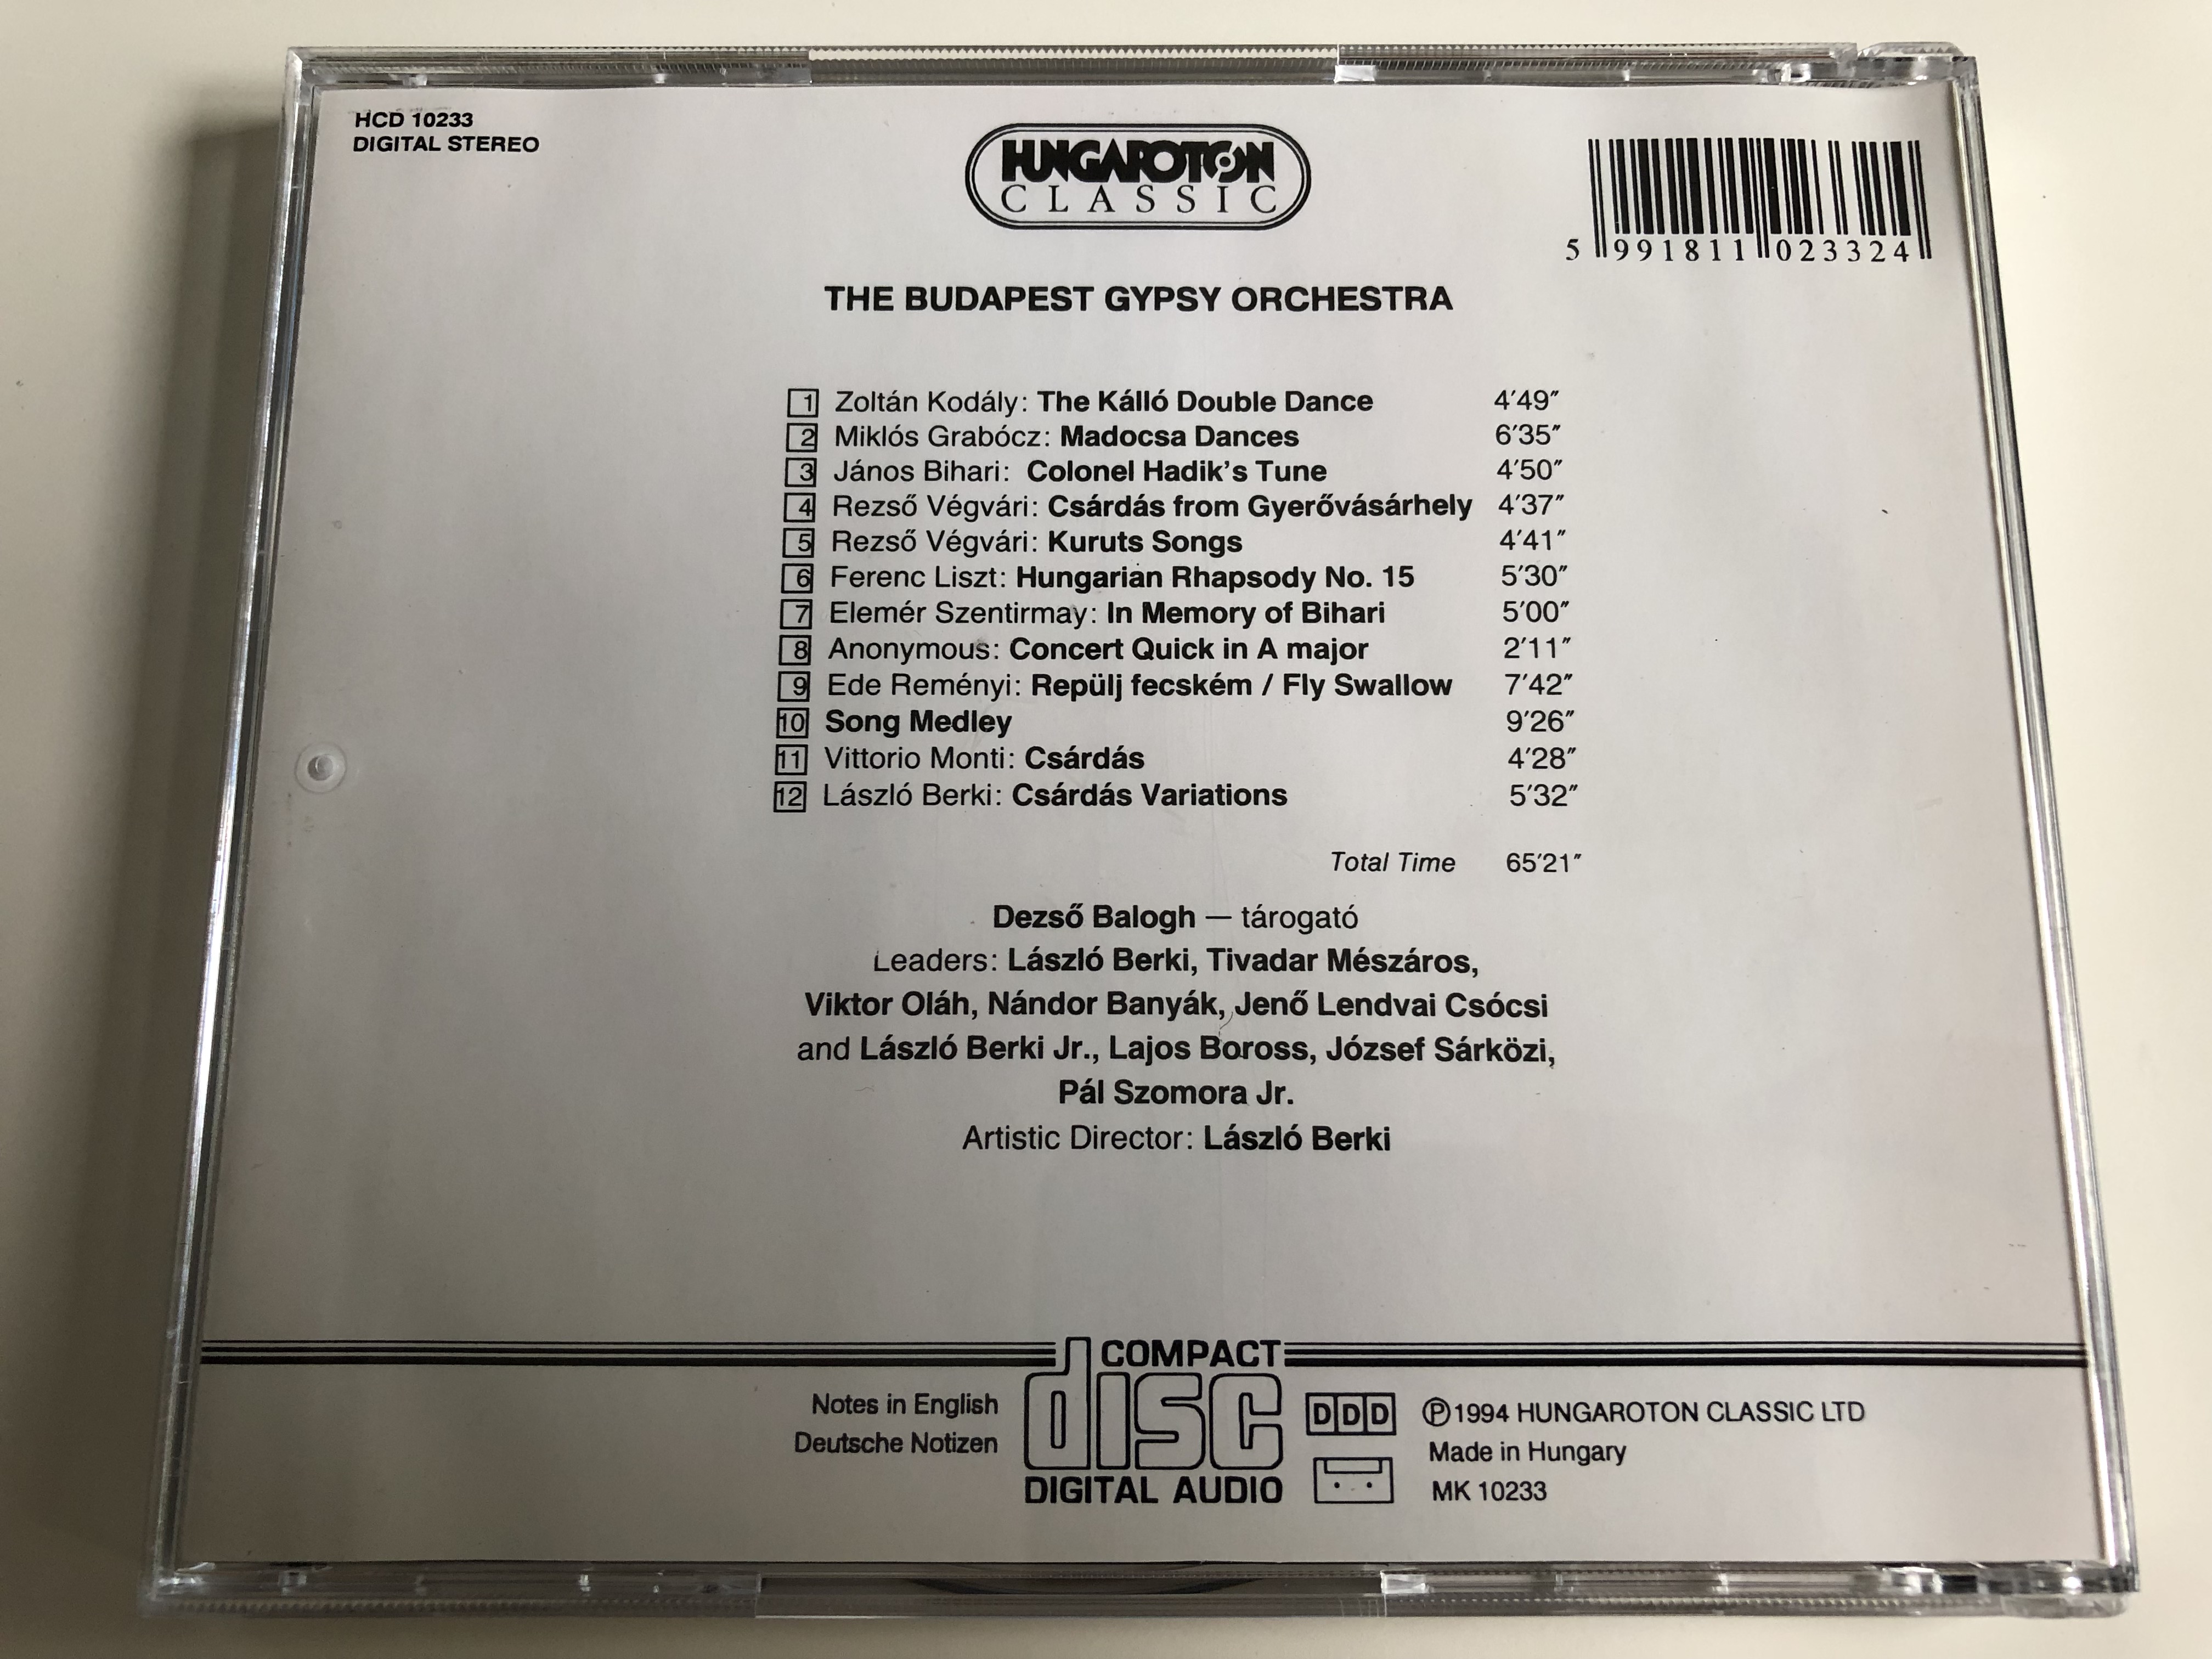 the-budapest-gypsy-orchestra-100-tag-budapest-cig-nyzenekar-art-director-l-szl-berki-hungaroton-classic-hcd-10233-audio-cd-1994-6-.jpg